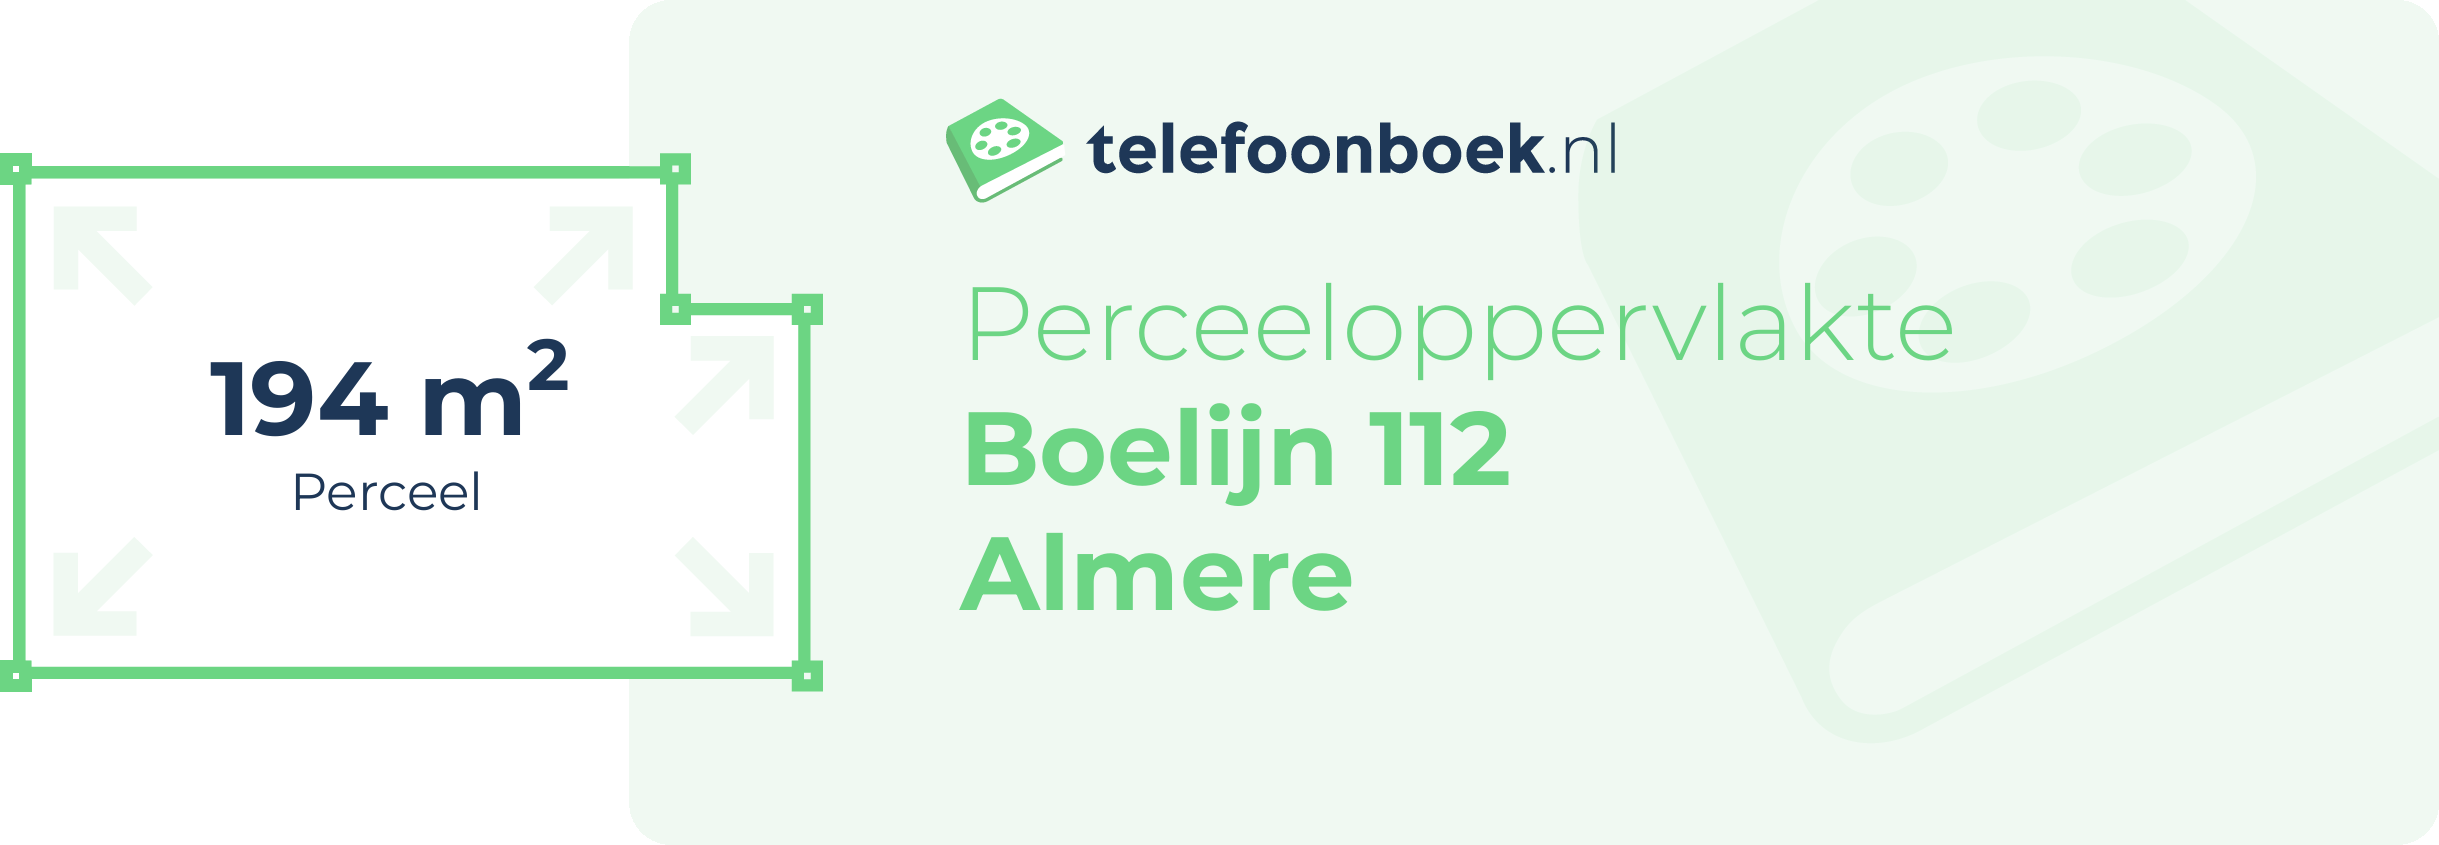 Perceeloppervlakte Boelijn 112 Almere